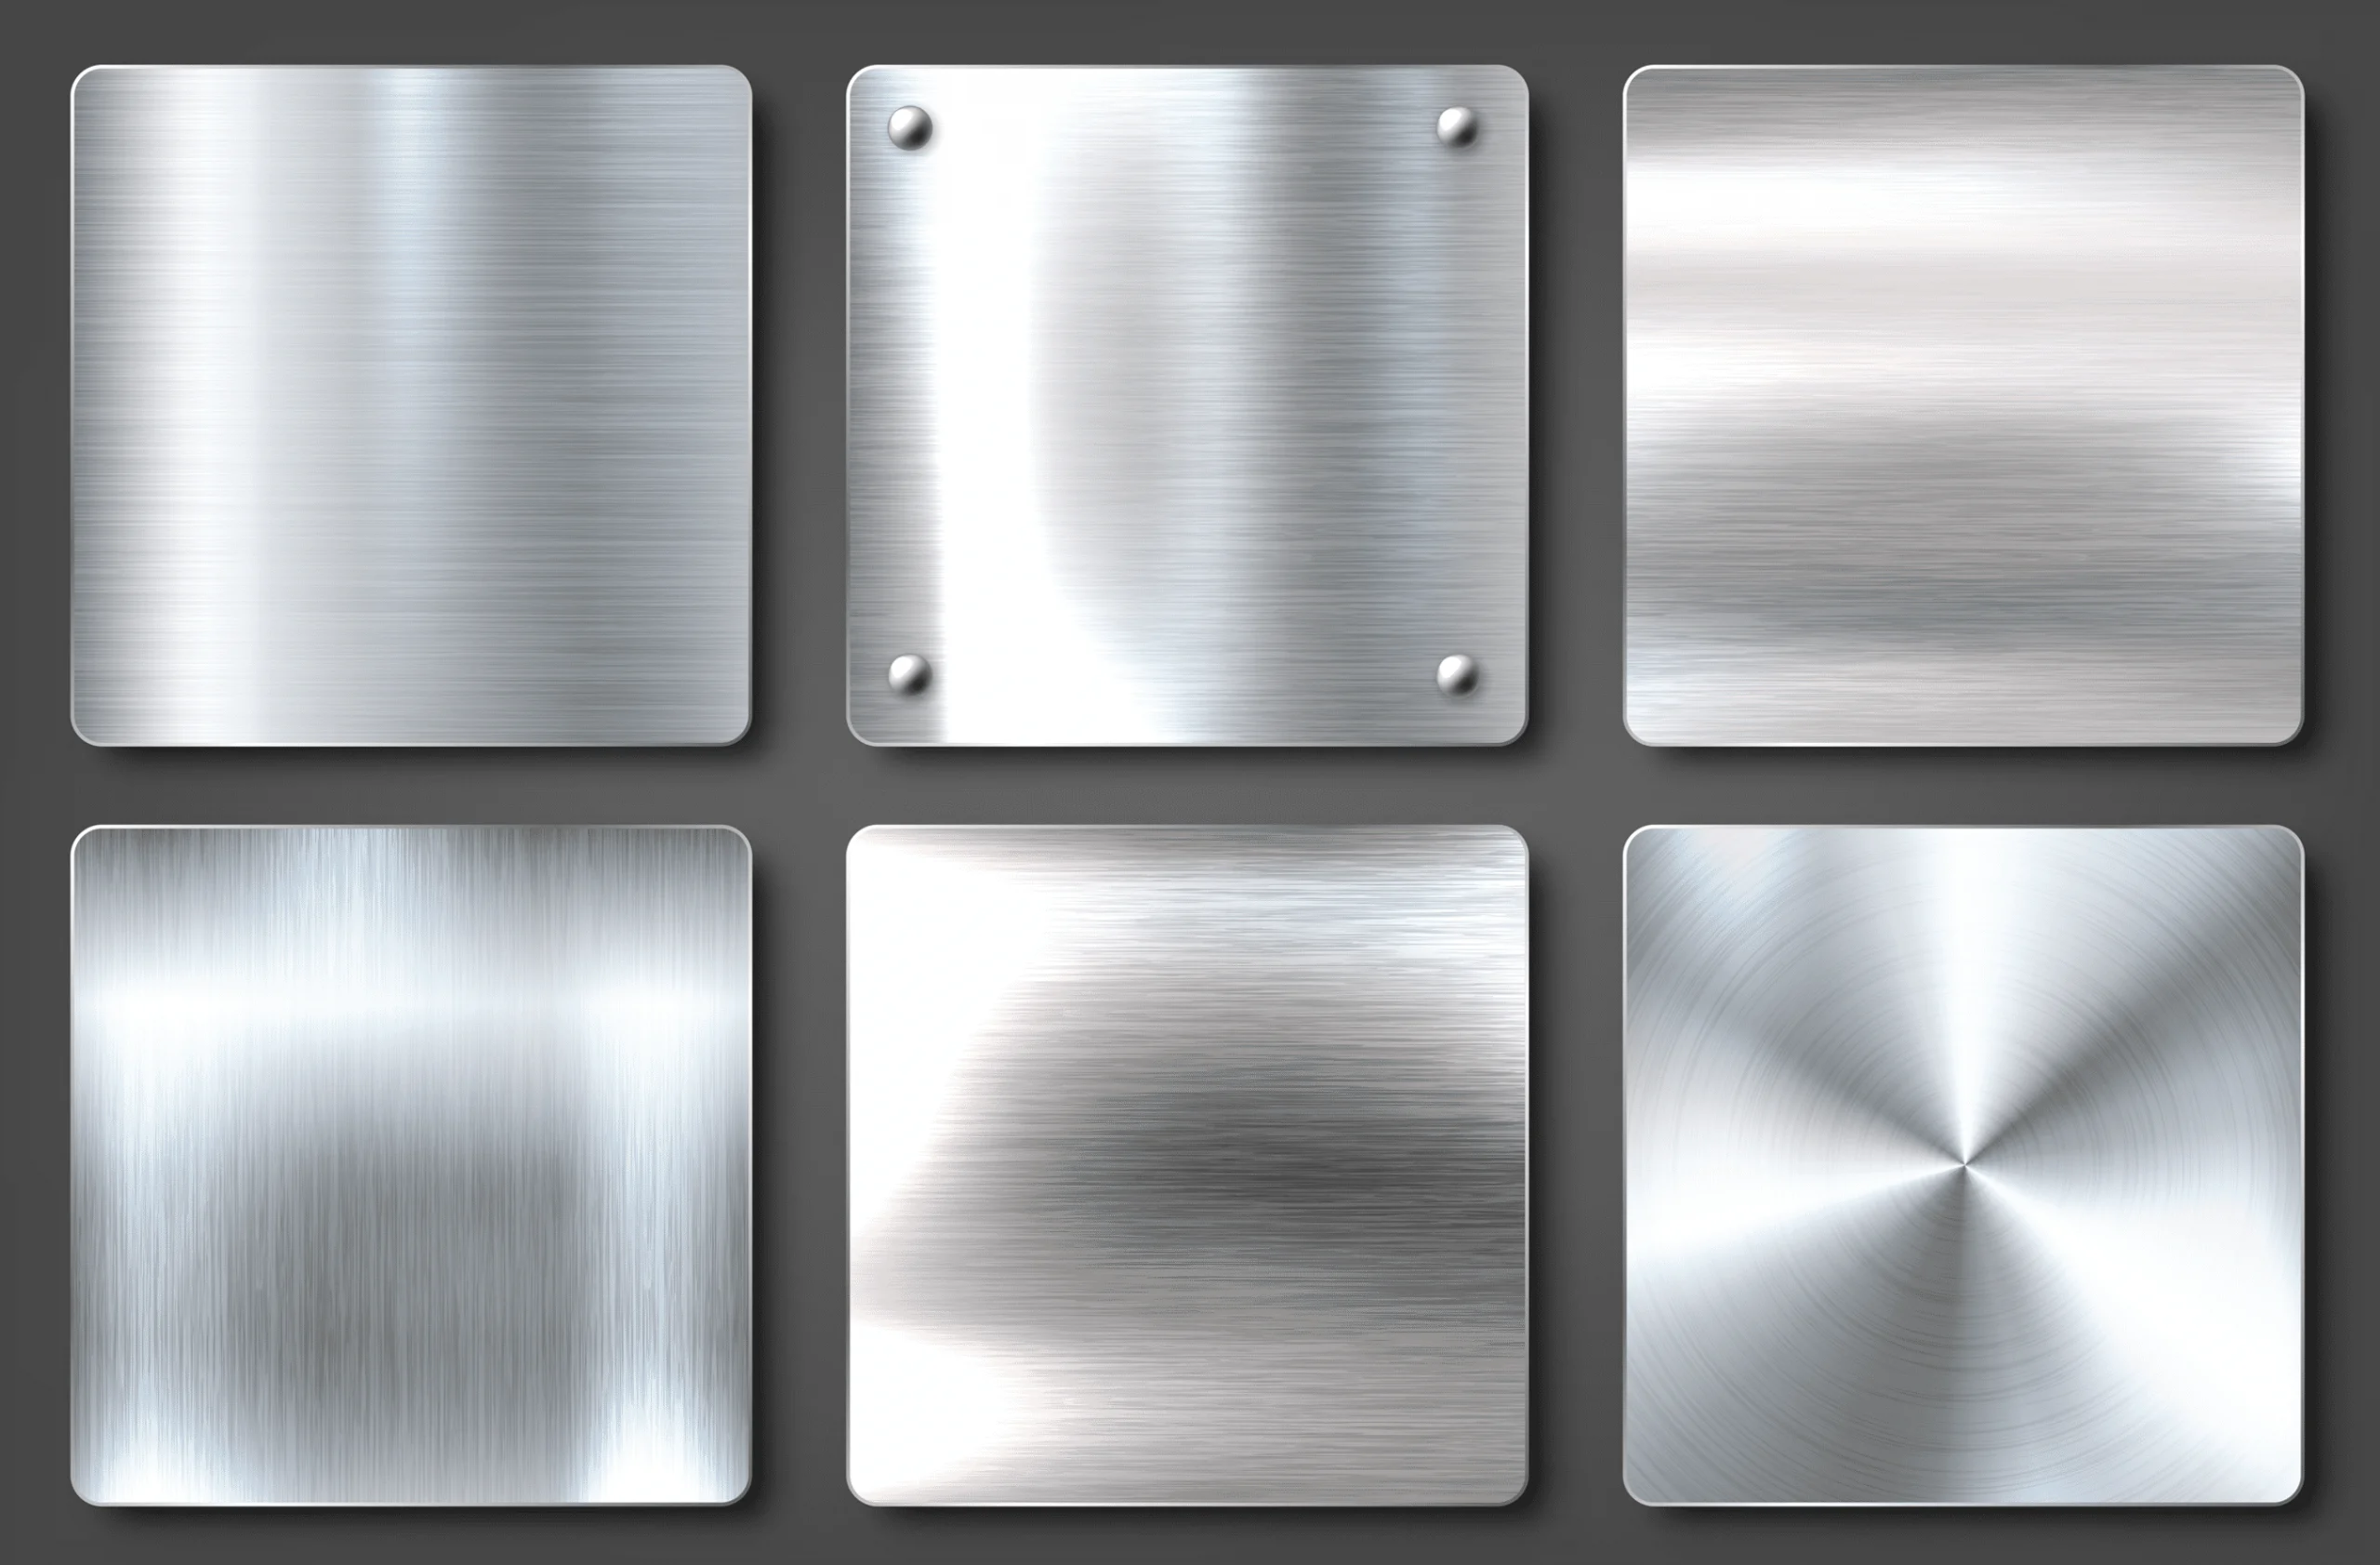 How To Remove Anodized Aluminum? - Aerospace Metals